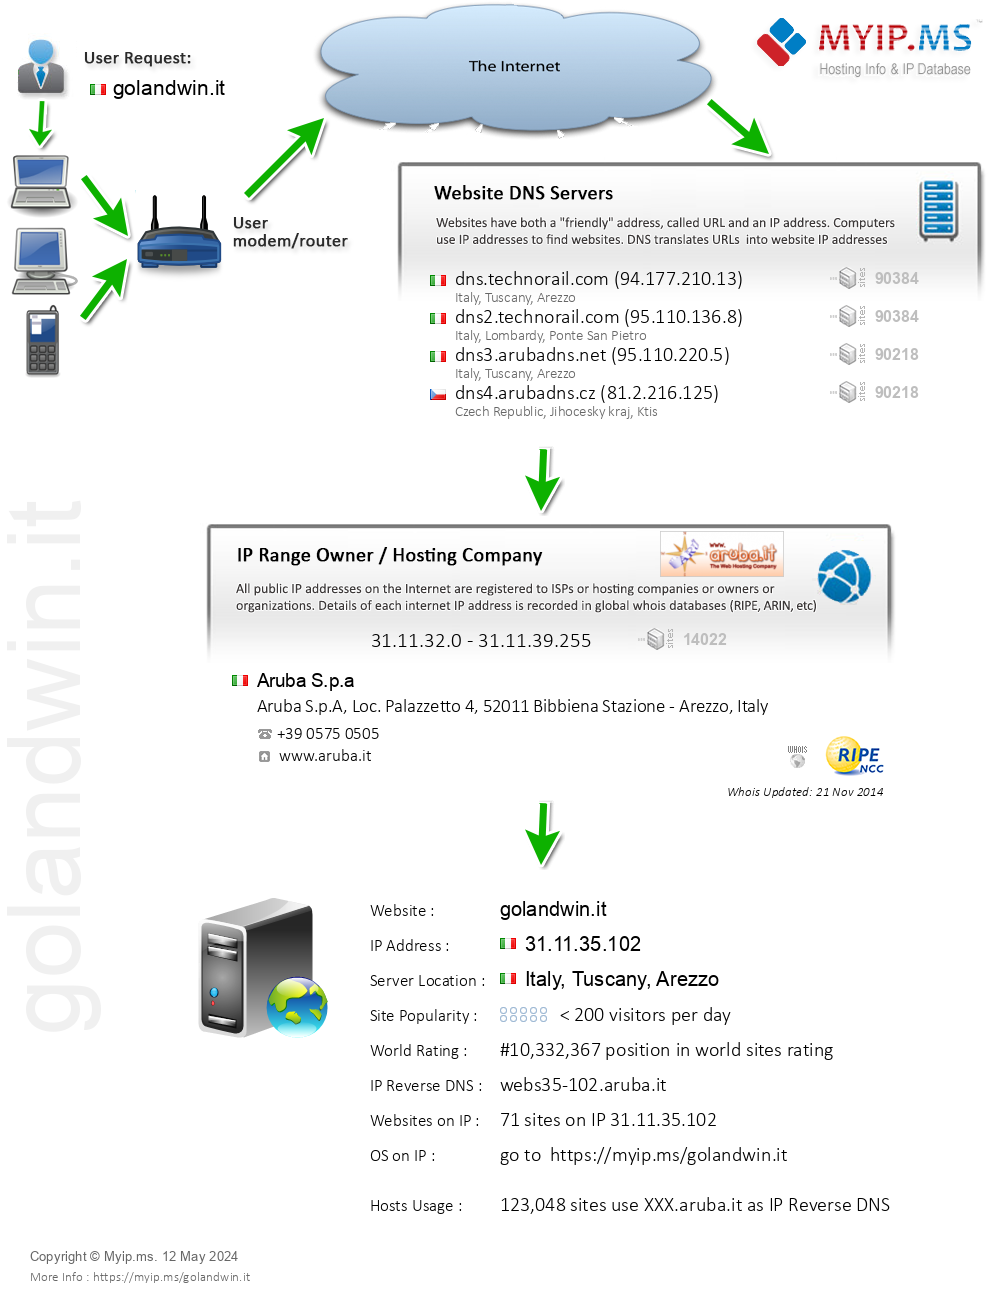 Golandwin.it - Website Hosting Visual IP Diagram